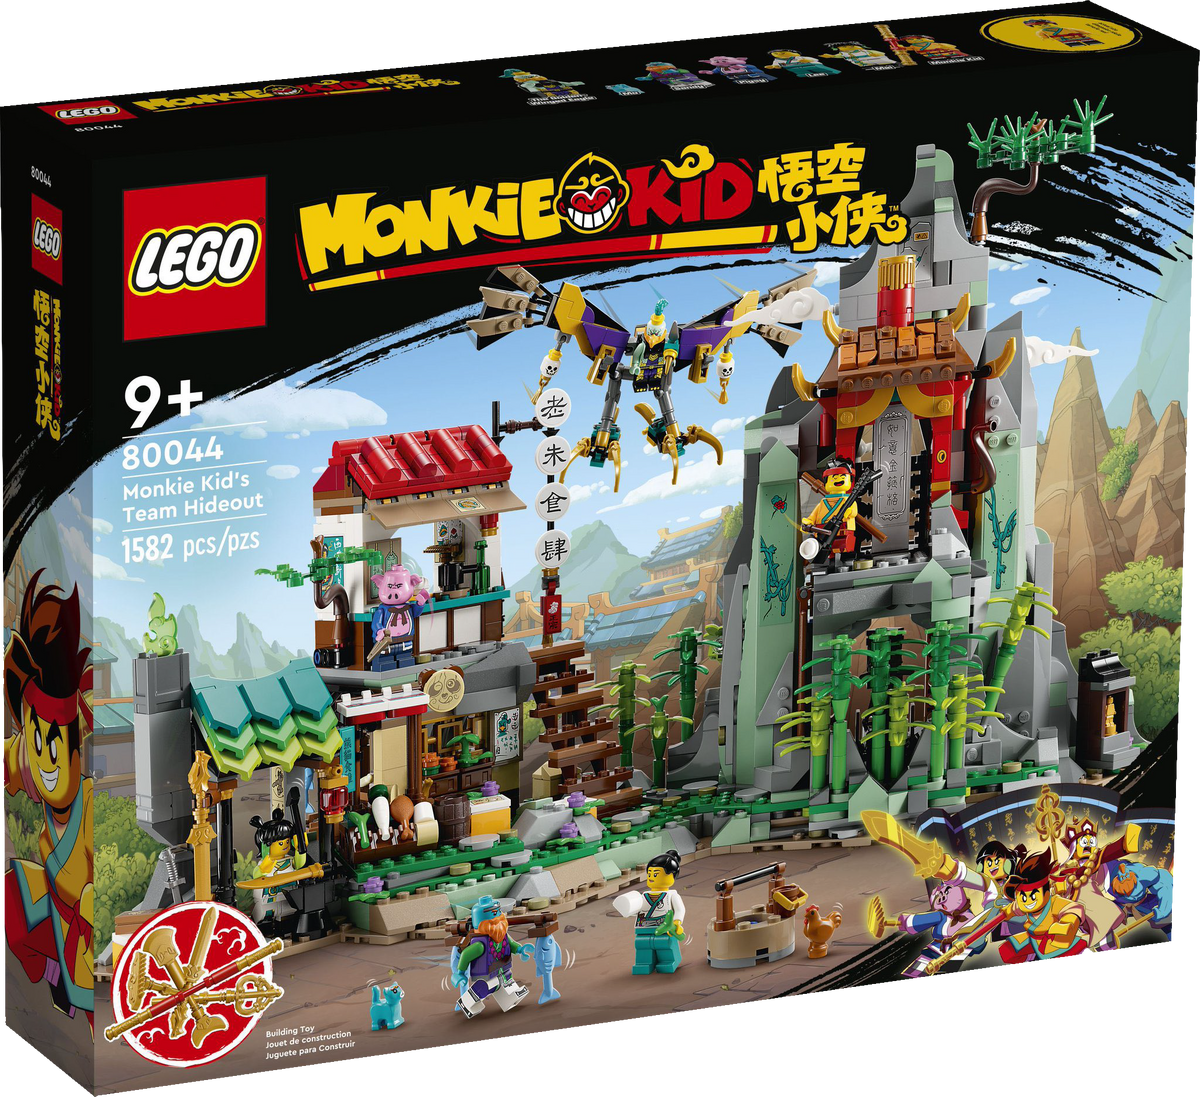 30656 Monkey King Marketplace, Monkie Kid Wiki